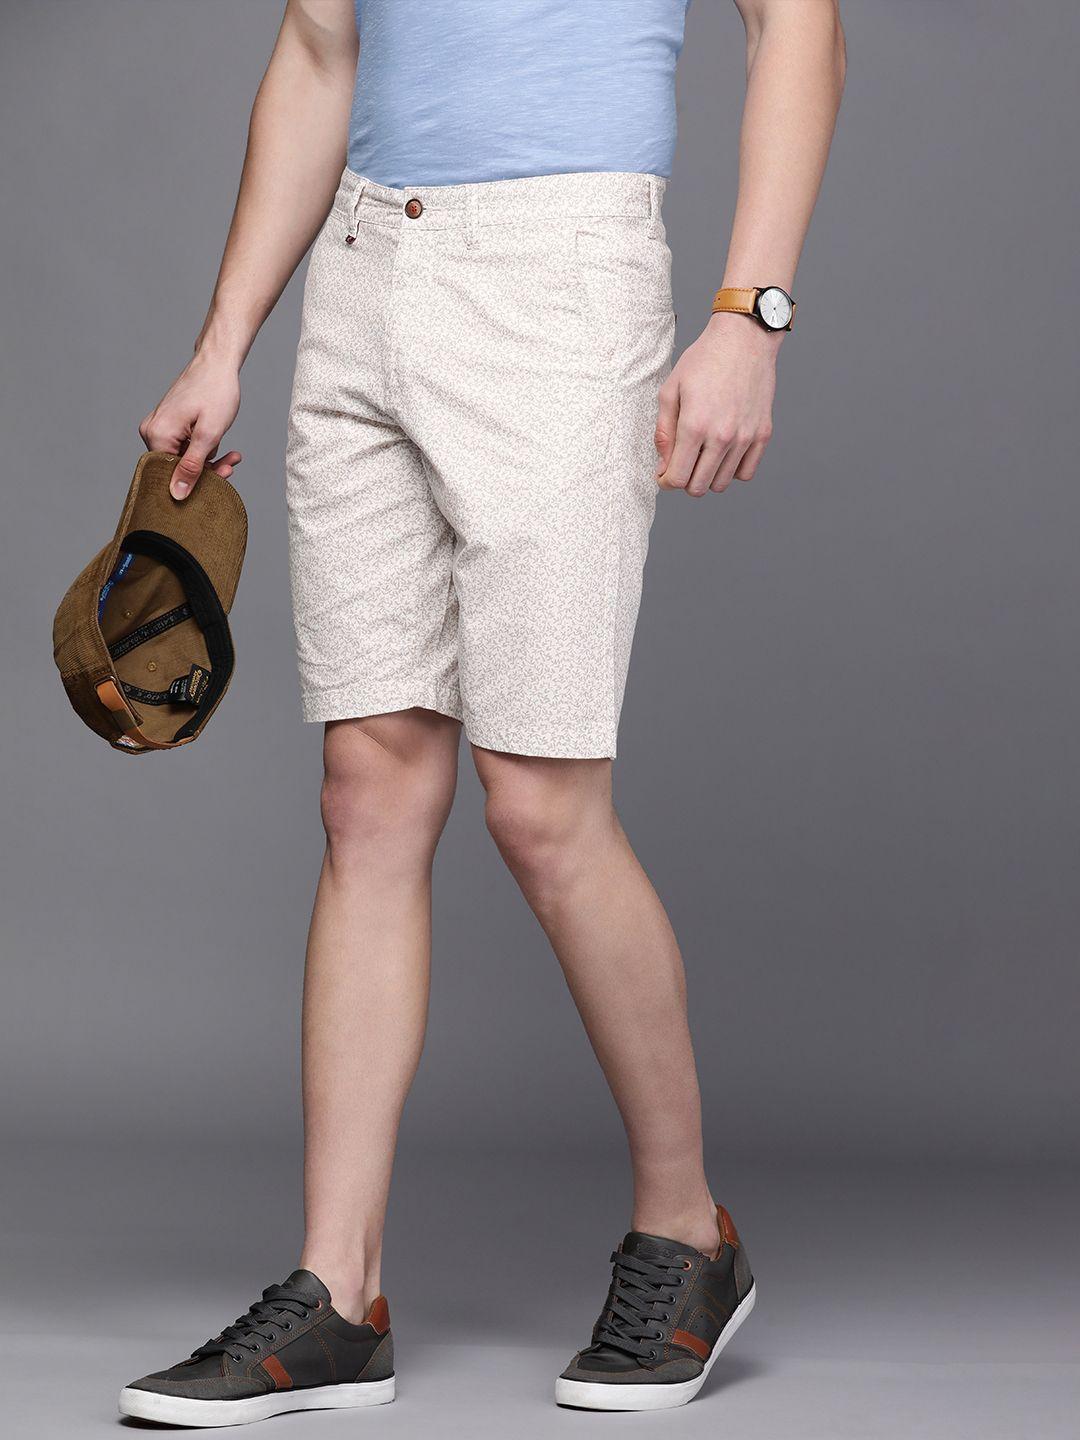 louis philippe sport men white printed slim fit chino shorts